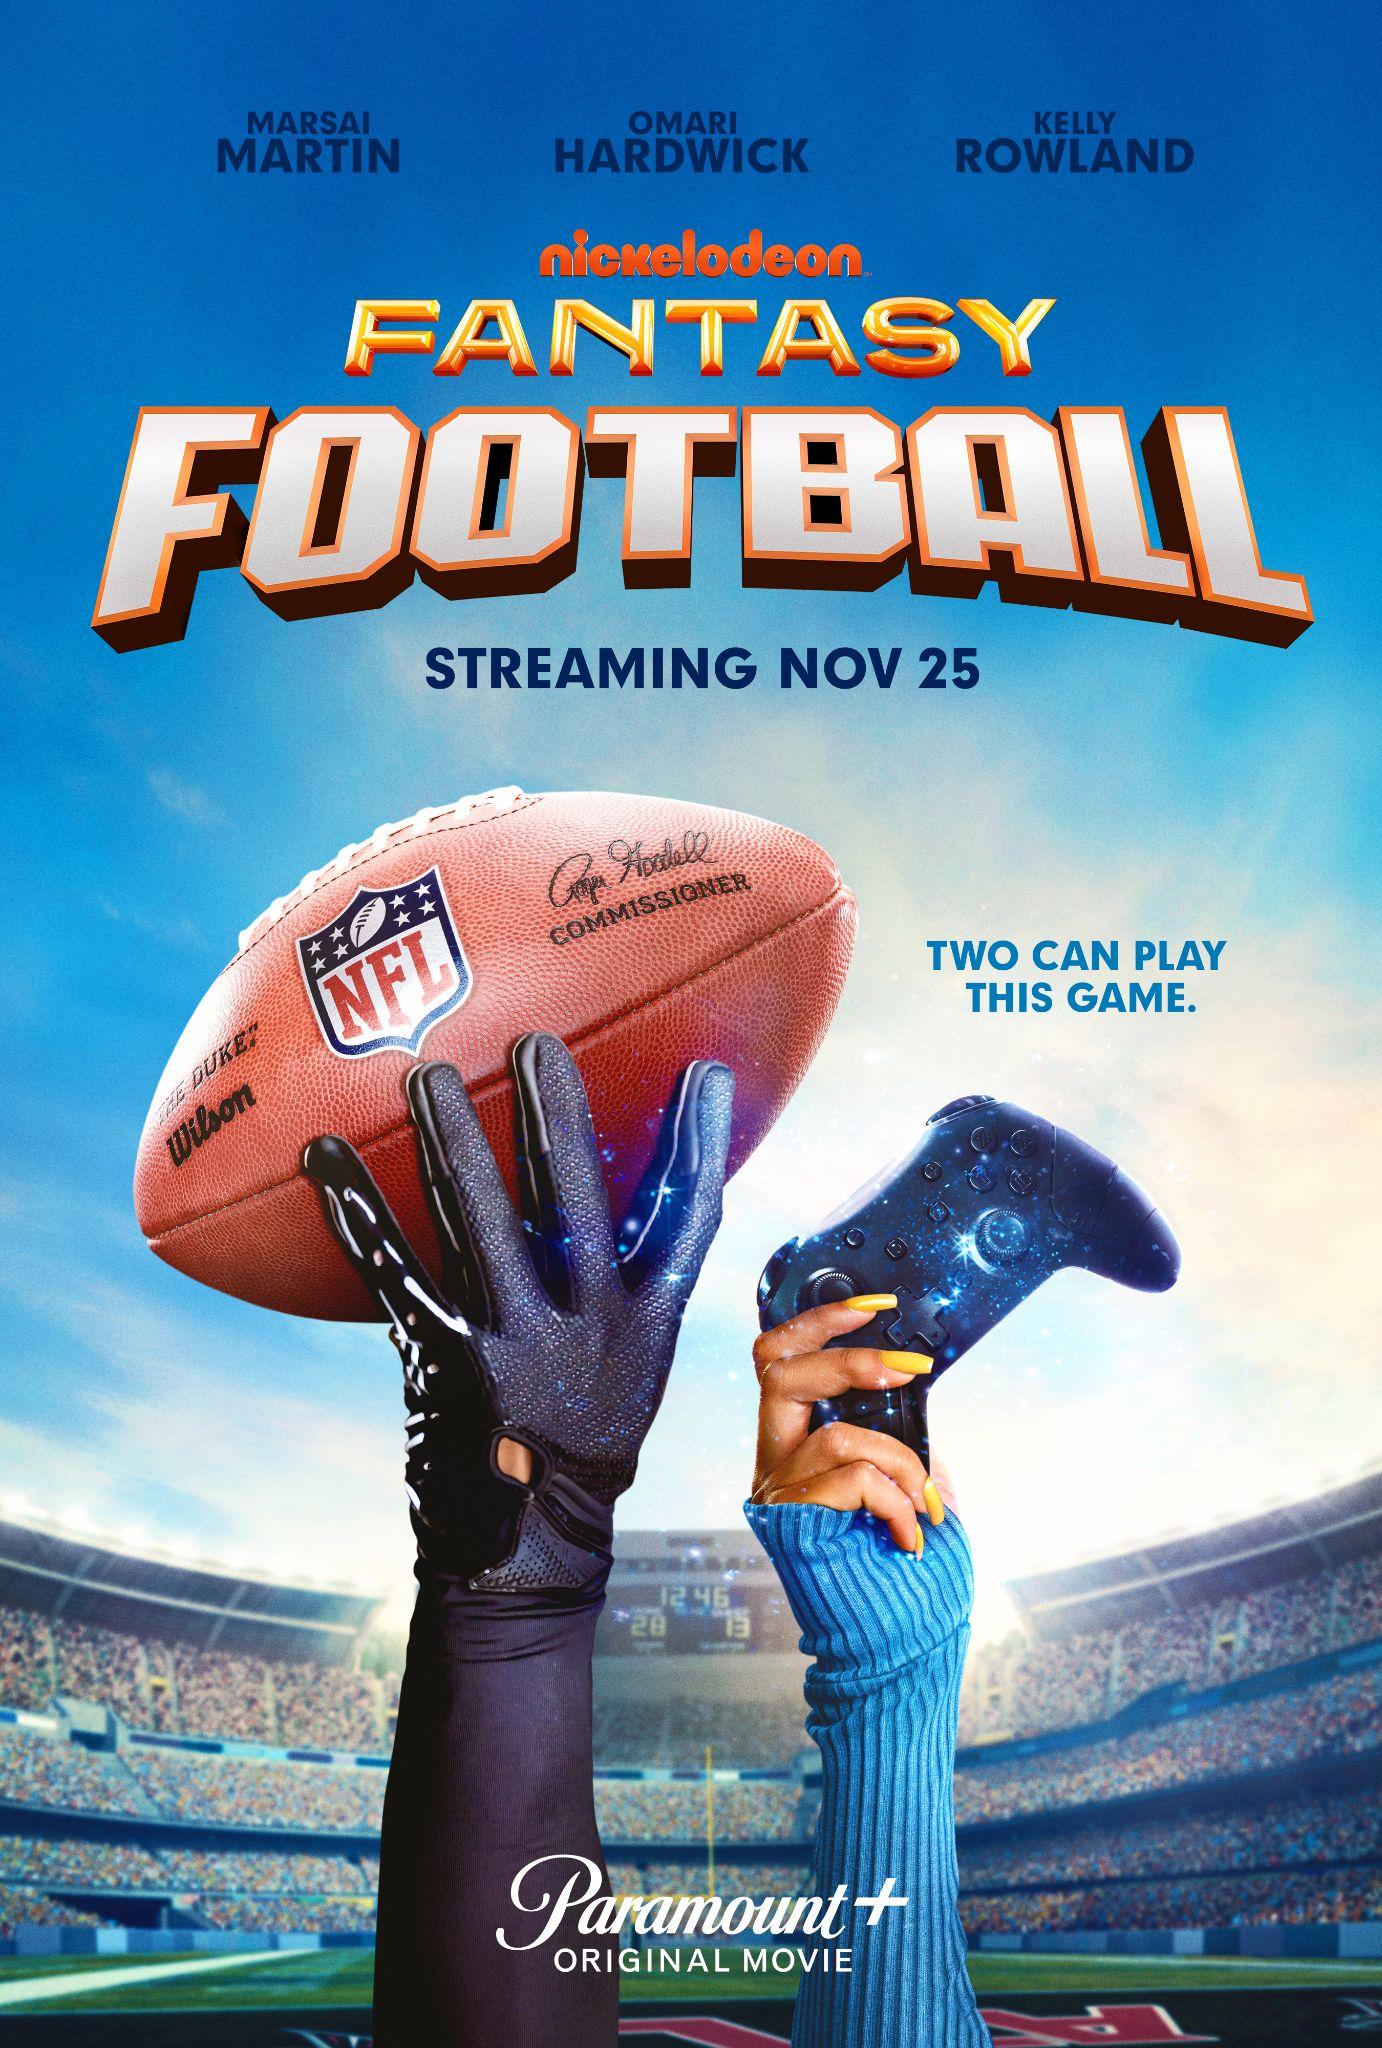 “Fantasy Football,” Starring Marsai Martin, Omari Hardwick, Kelly